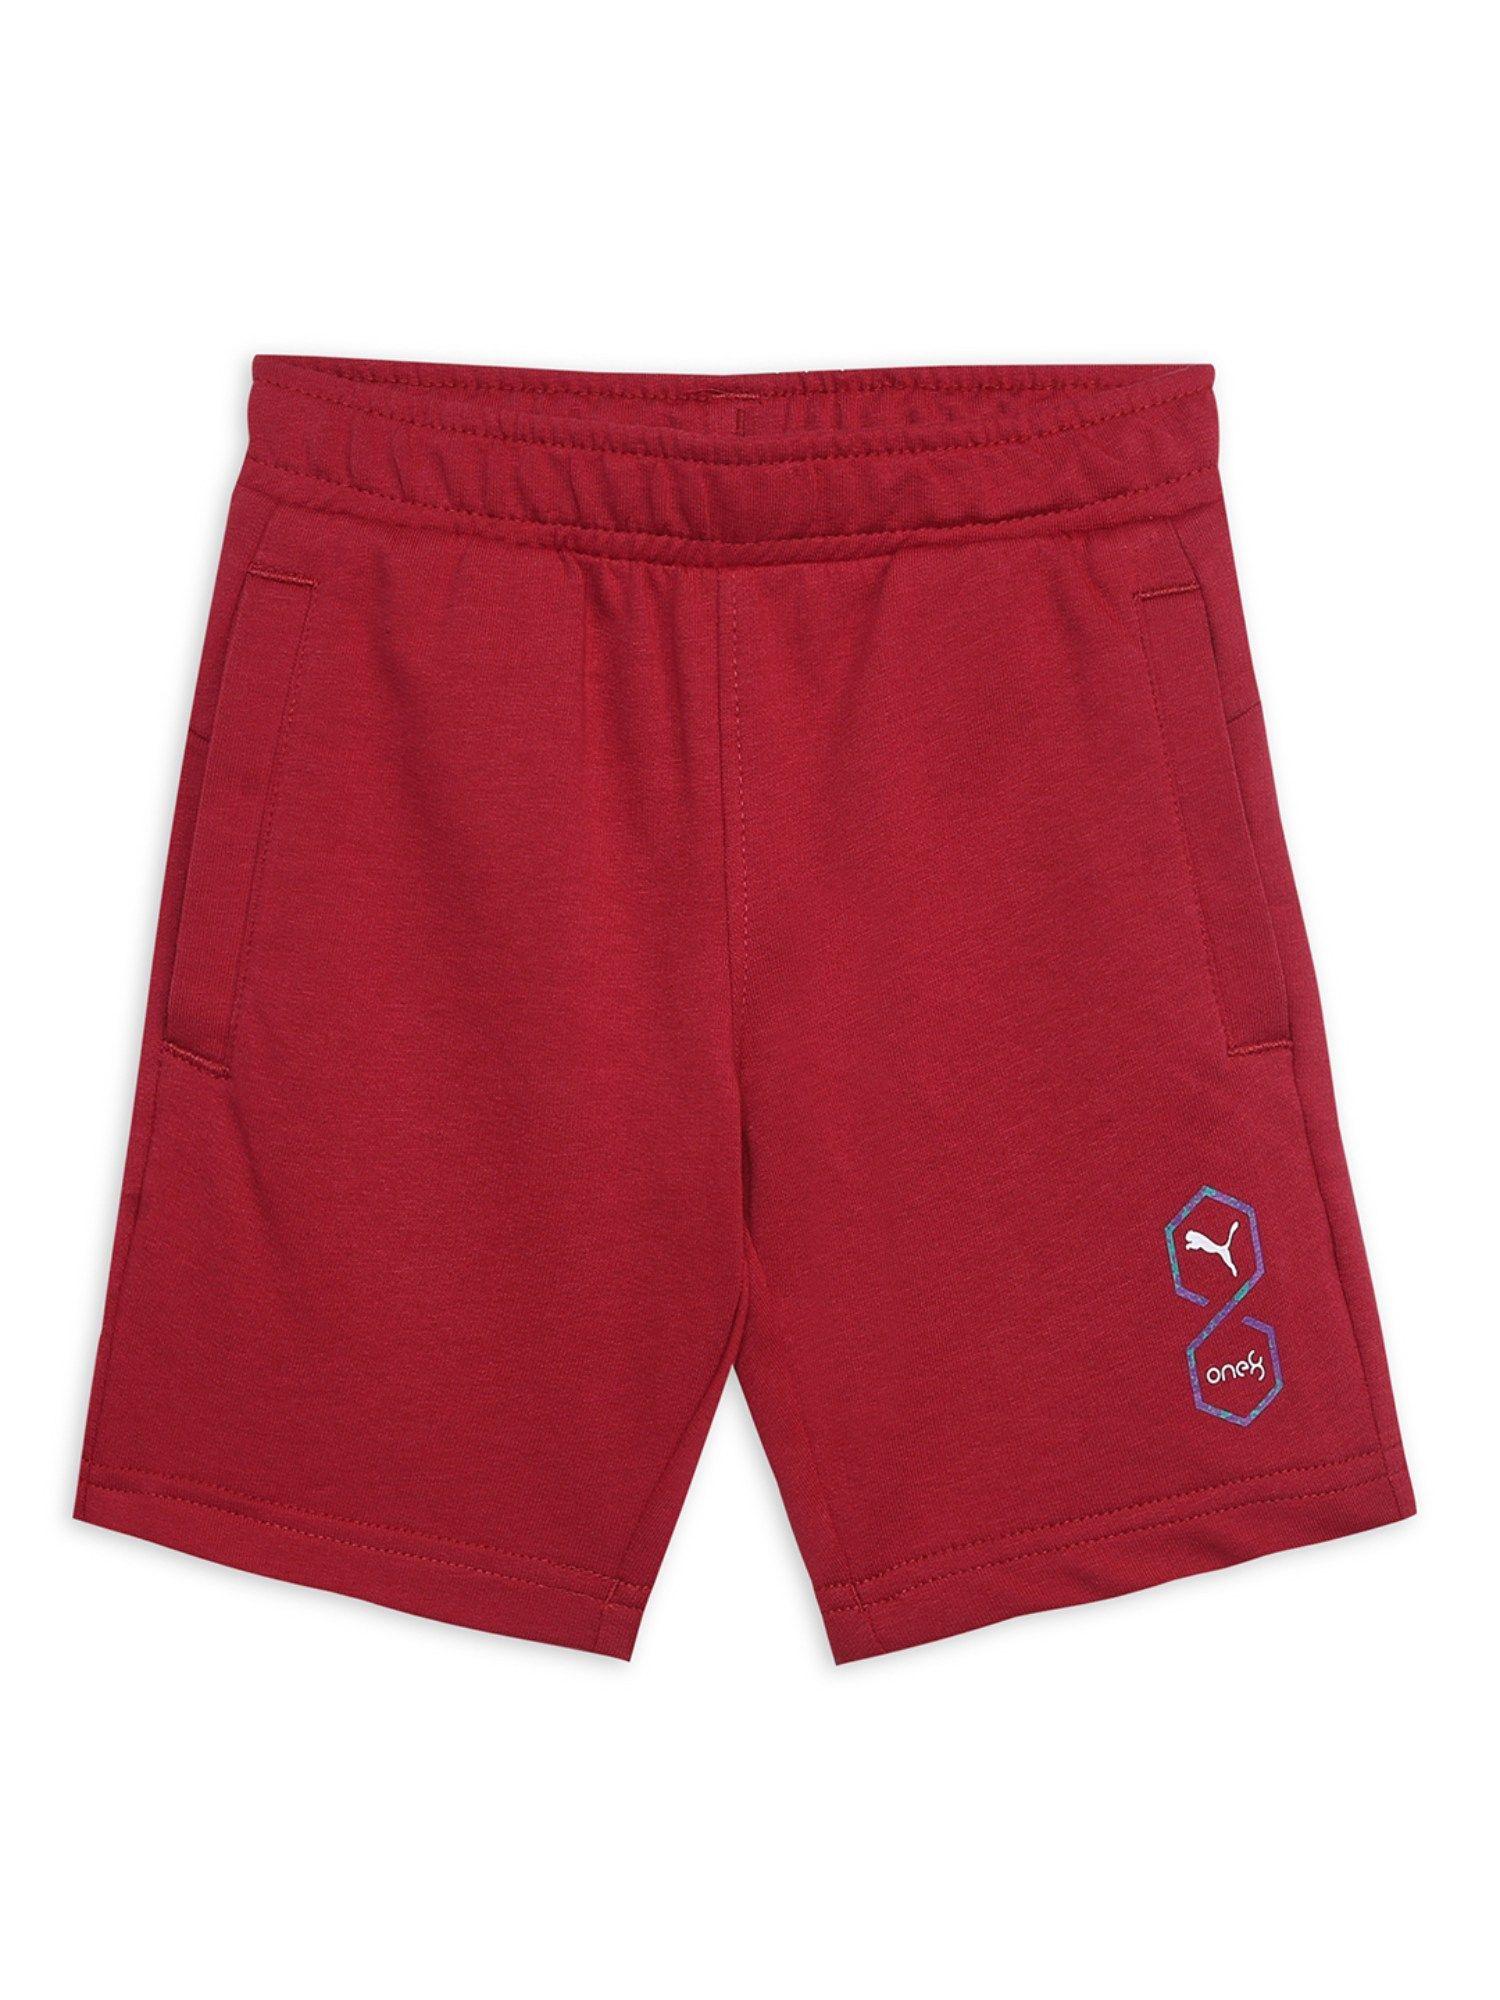 xone8 elevated b boys red shorts